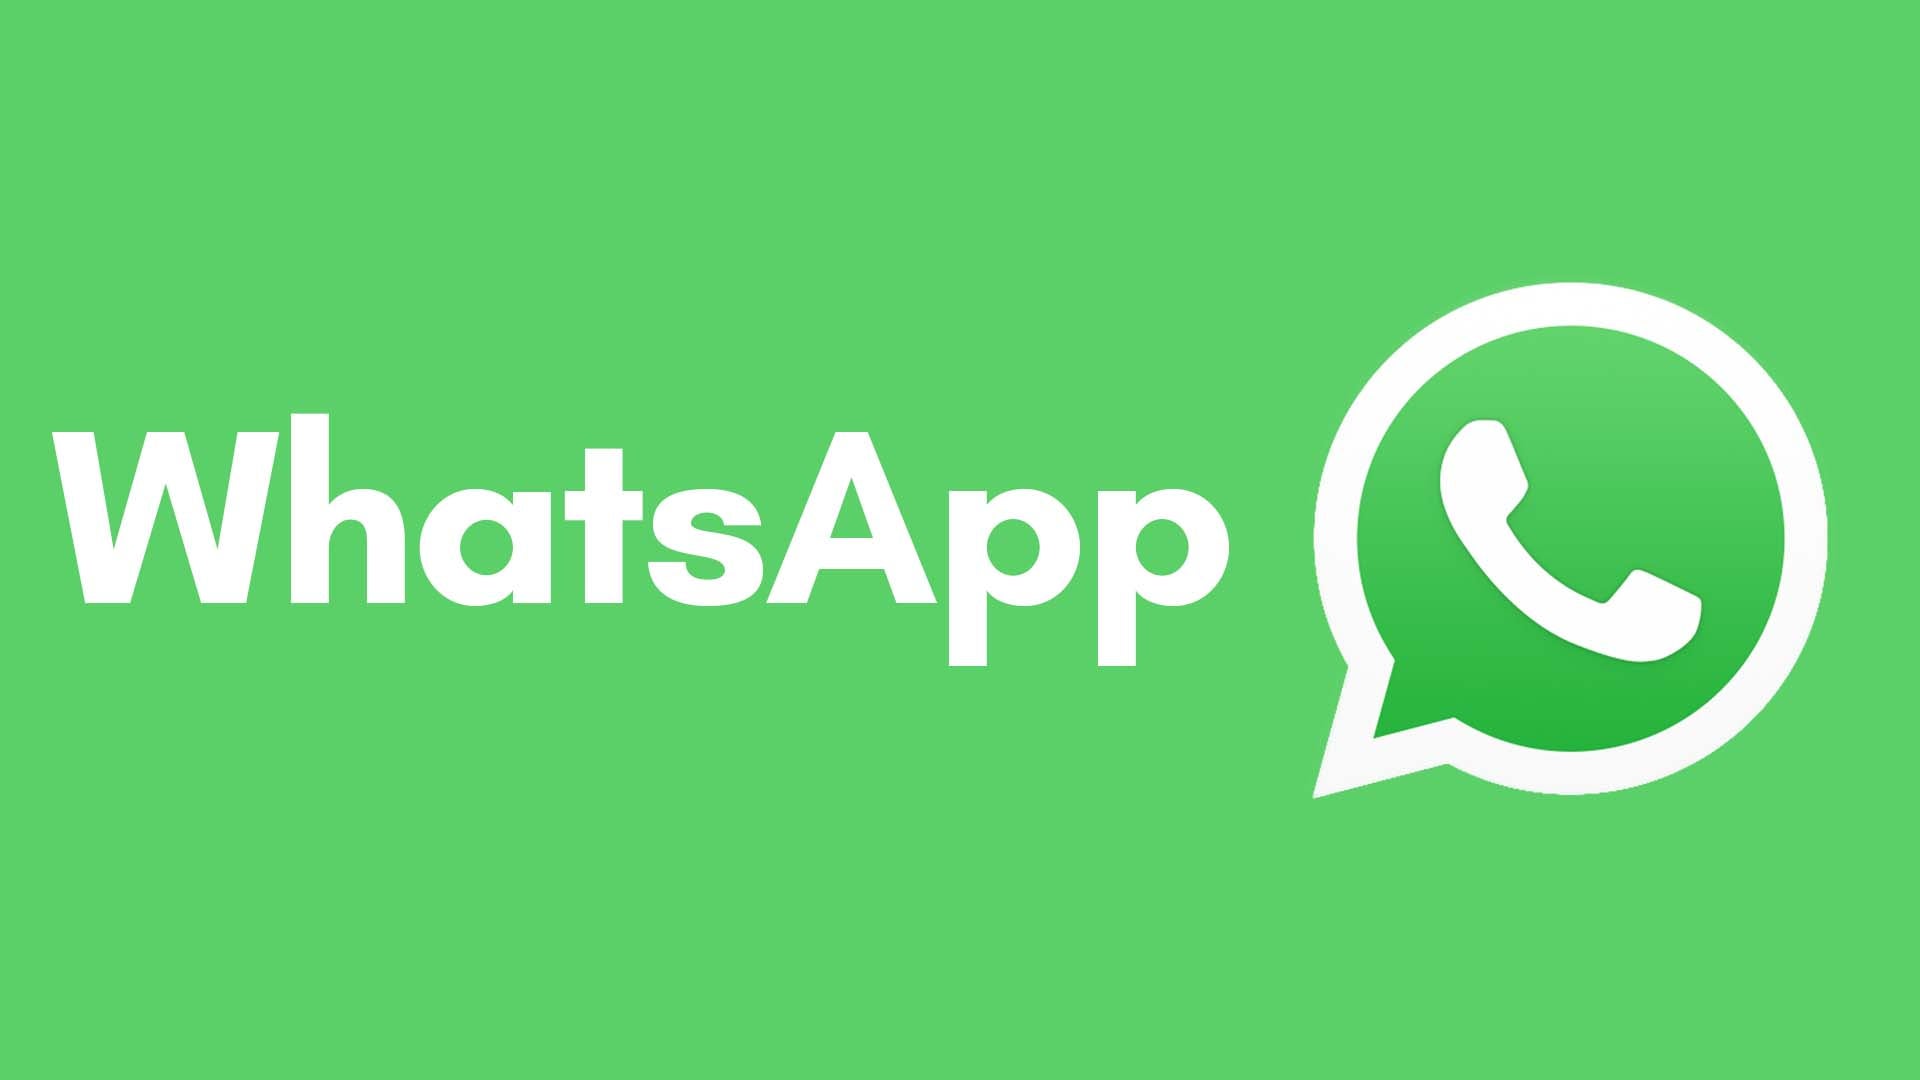 WhatsApp账号批发的优势与特点剖析